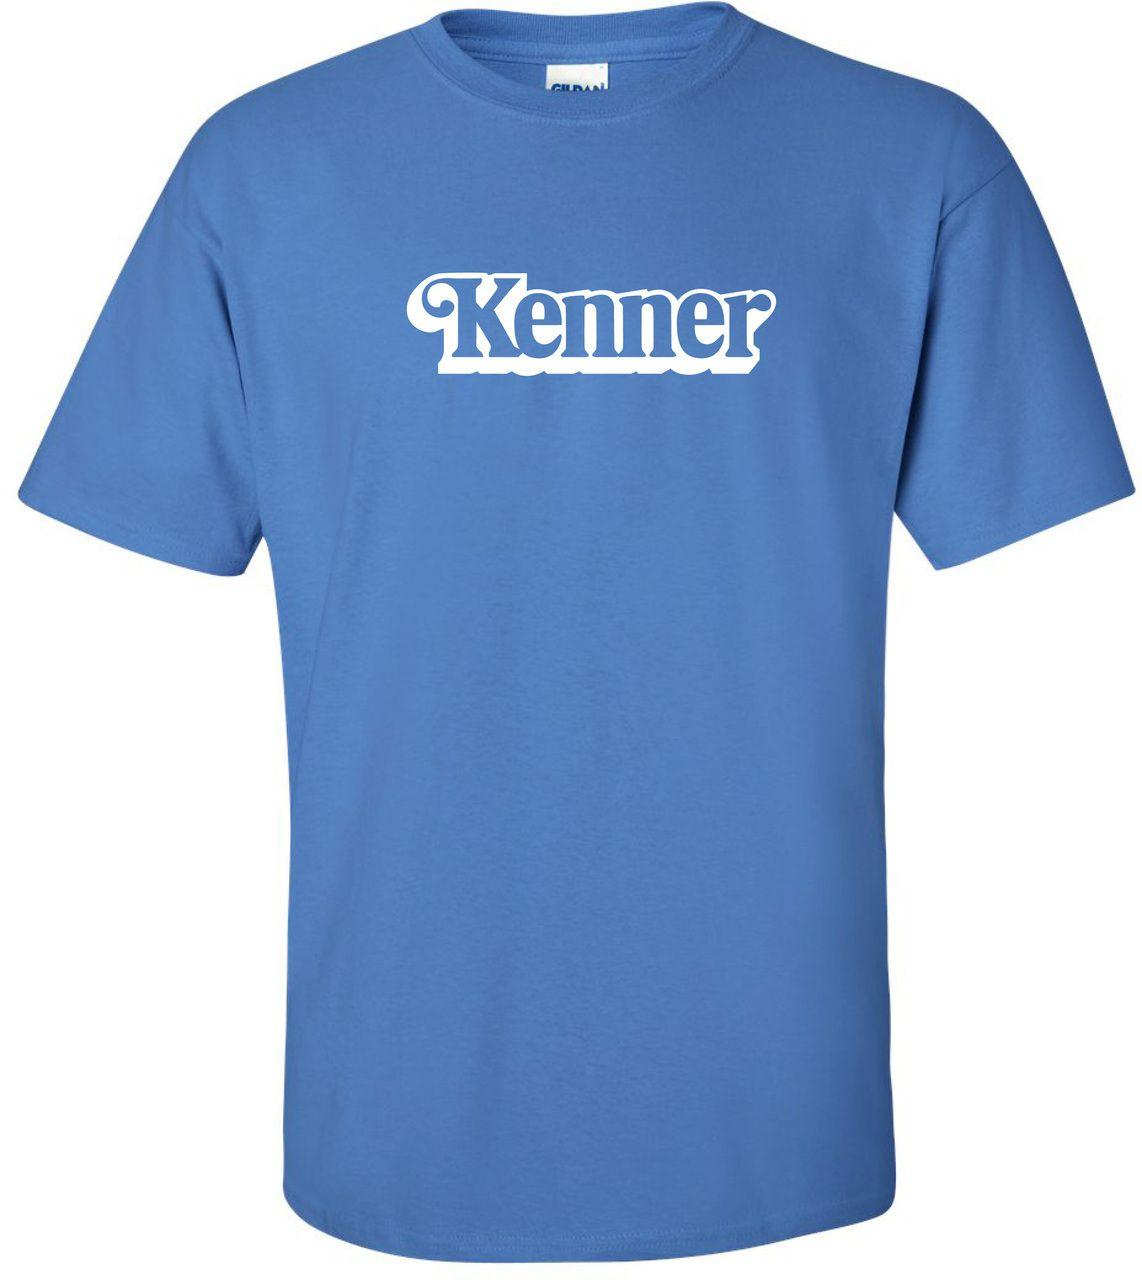 Kenner Logo - Kenner Logo 80s Toy Vintage Cool T Shirt